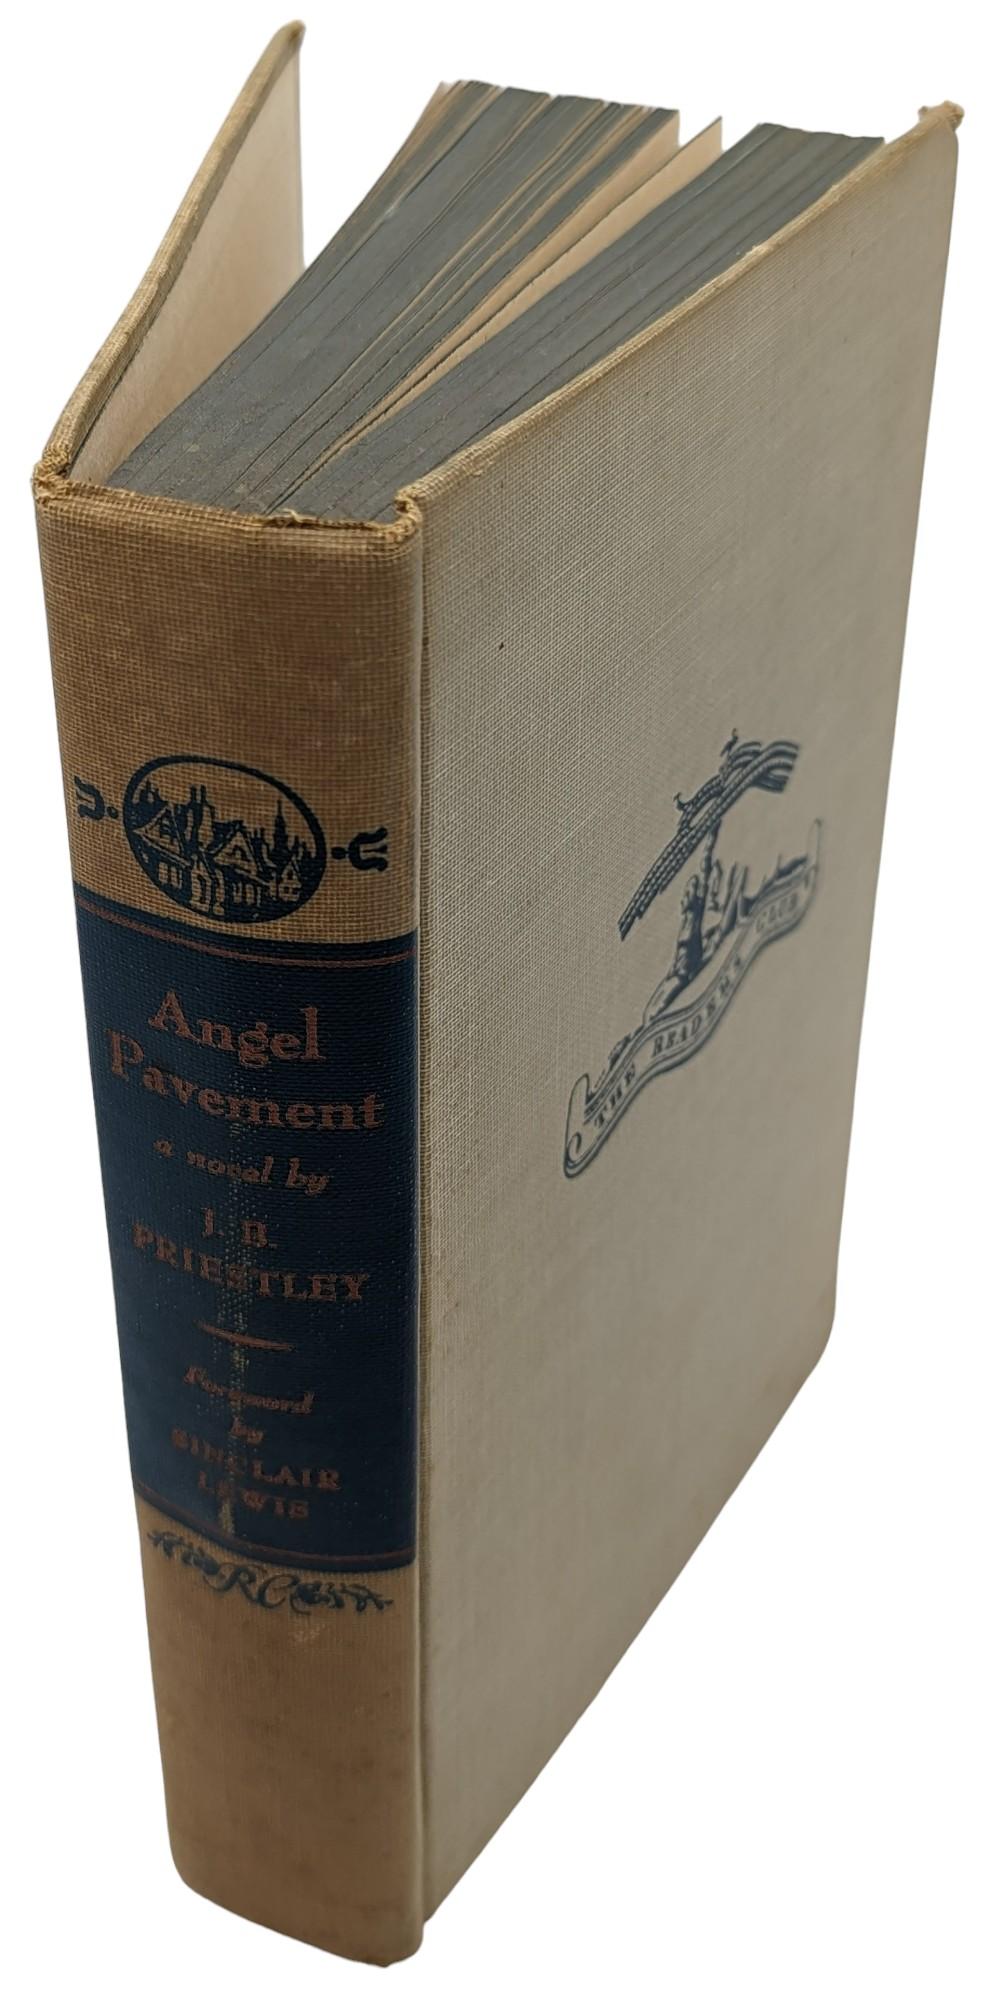 "Angel Pavement" by J. B. Priestley 1930